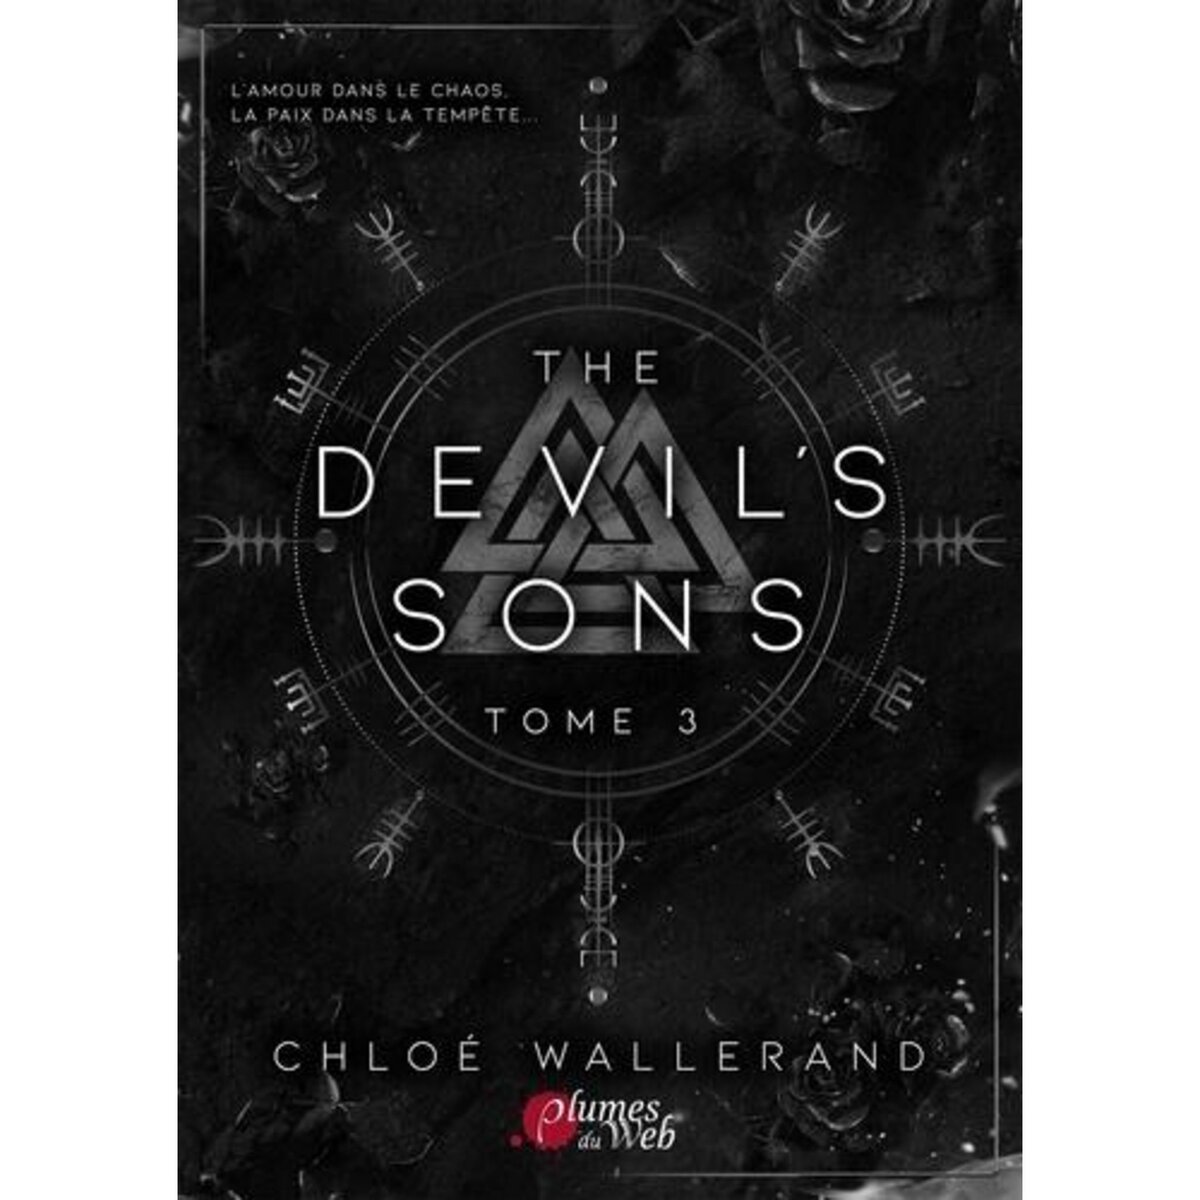  THE DEVIL'S SONS TOME 3 , Wallerand Chloé